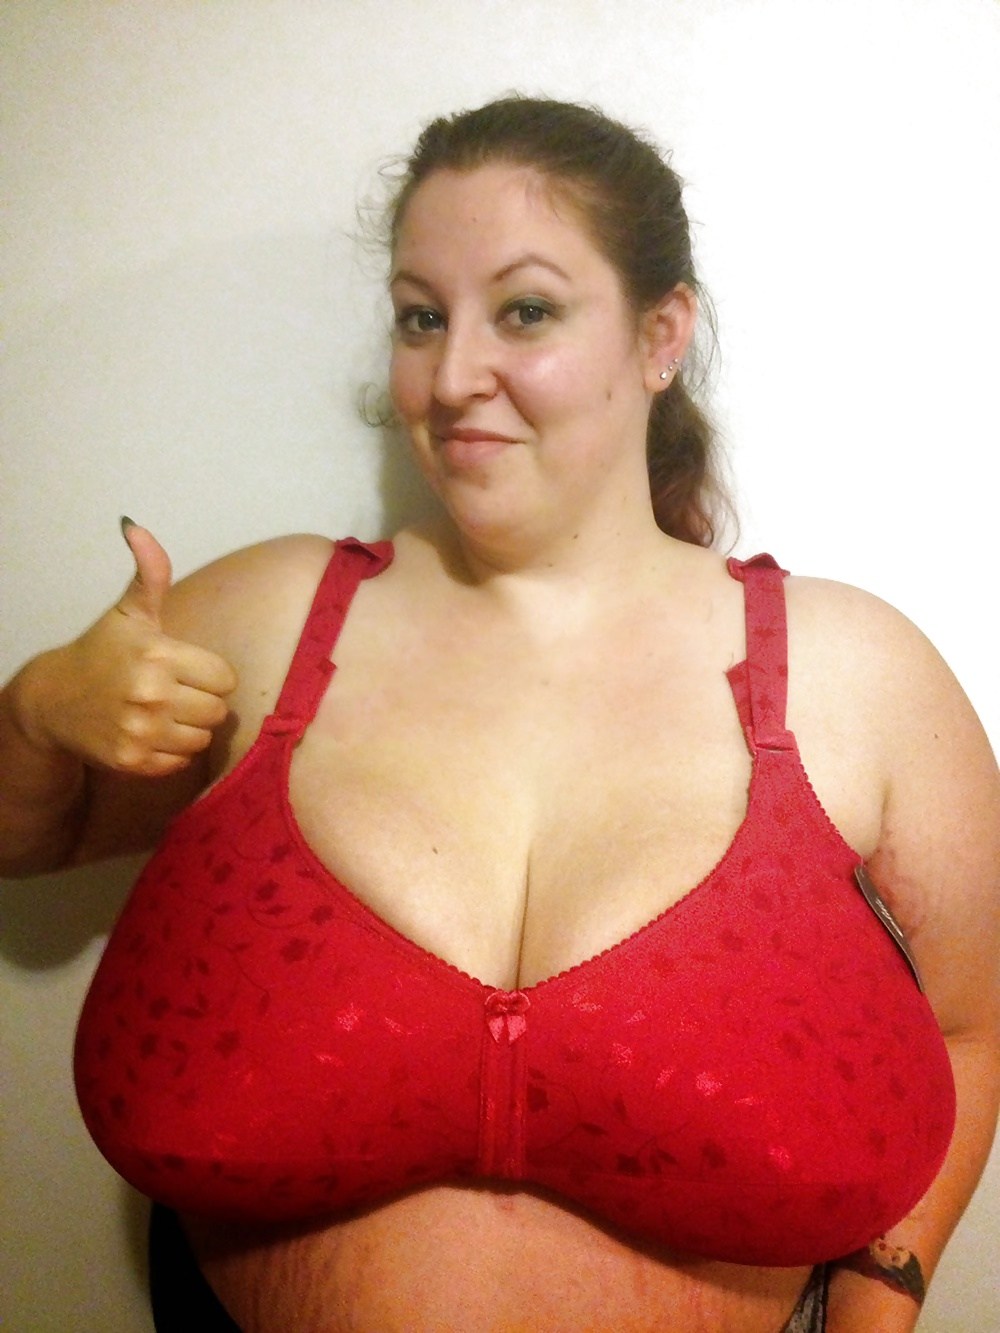 Plus Size Boobs Sex - Huge Fat Boobs in a Bra (68 photos) - sex eporner pics